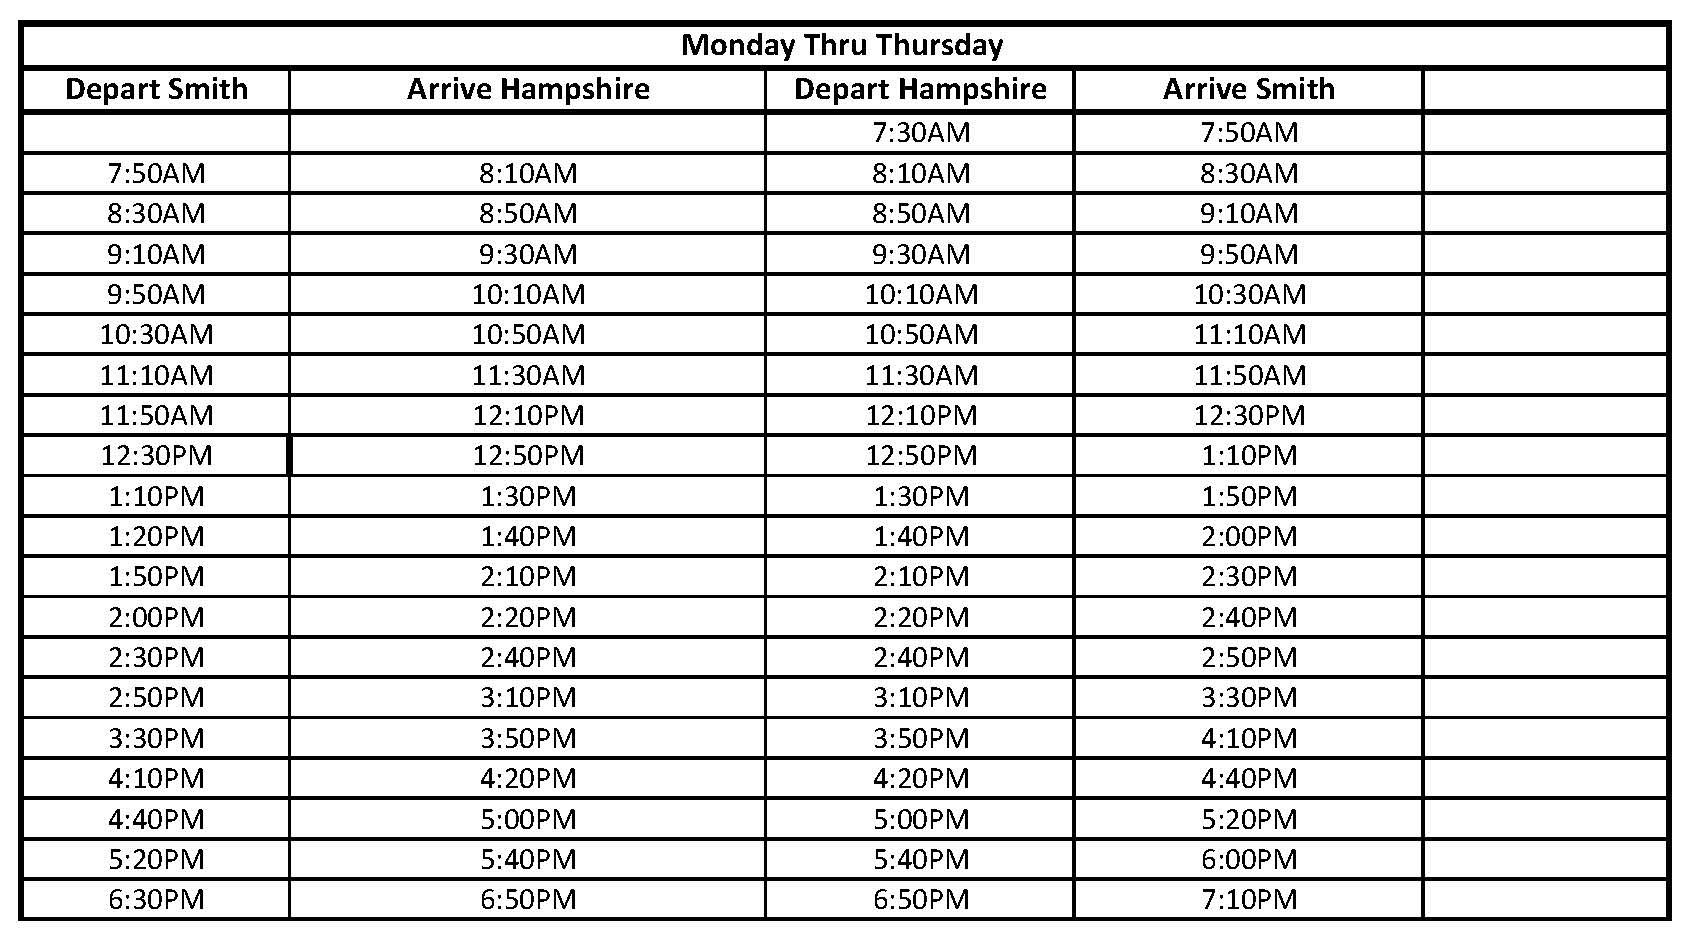 Bus schedule for Monday through Thursday